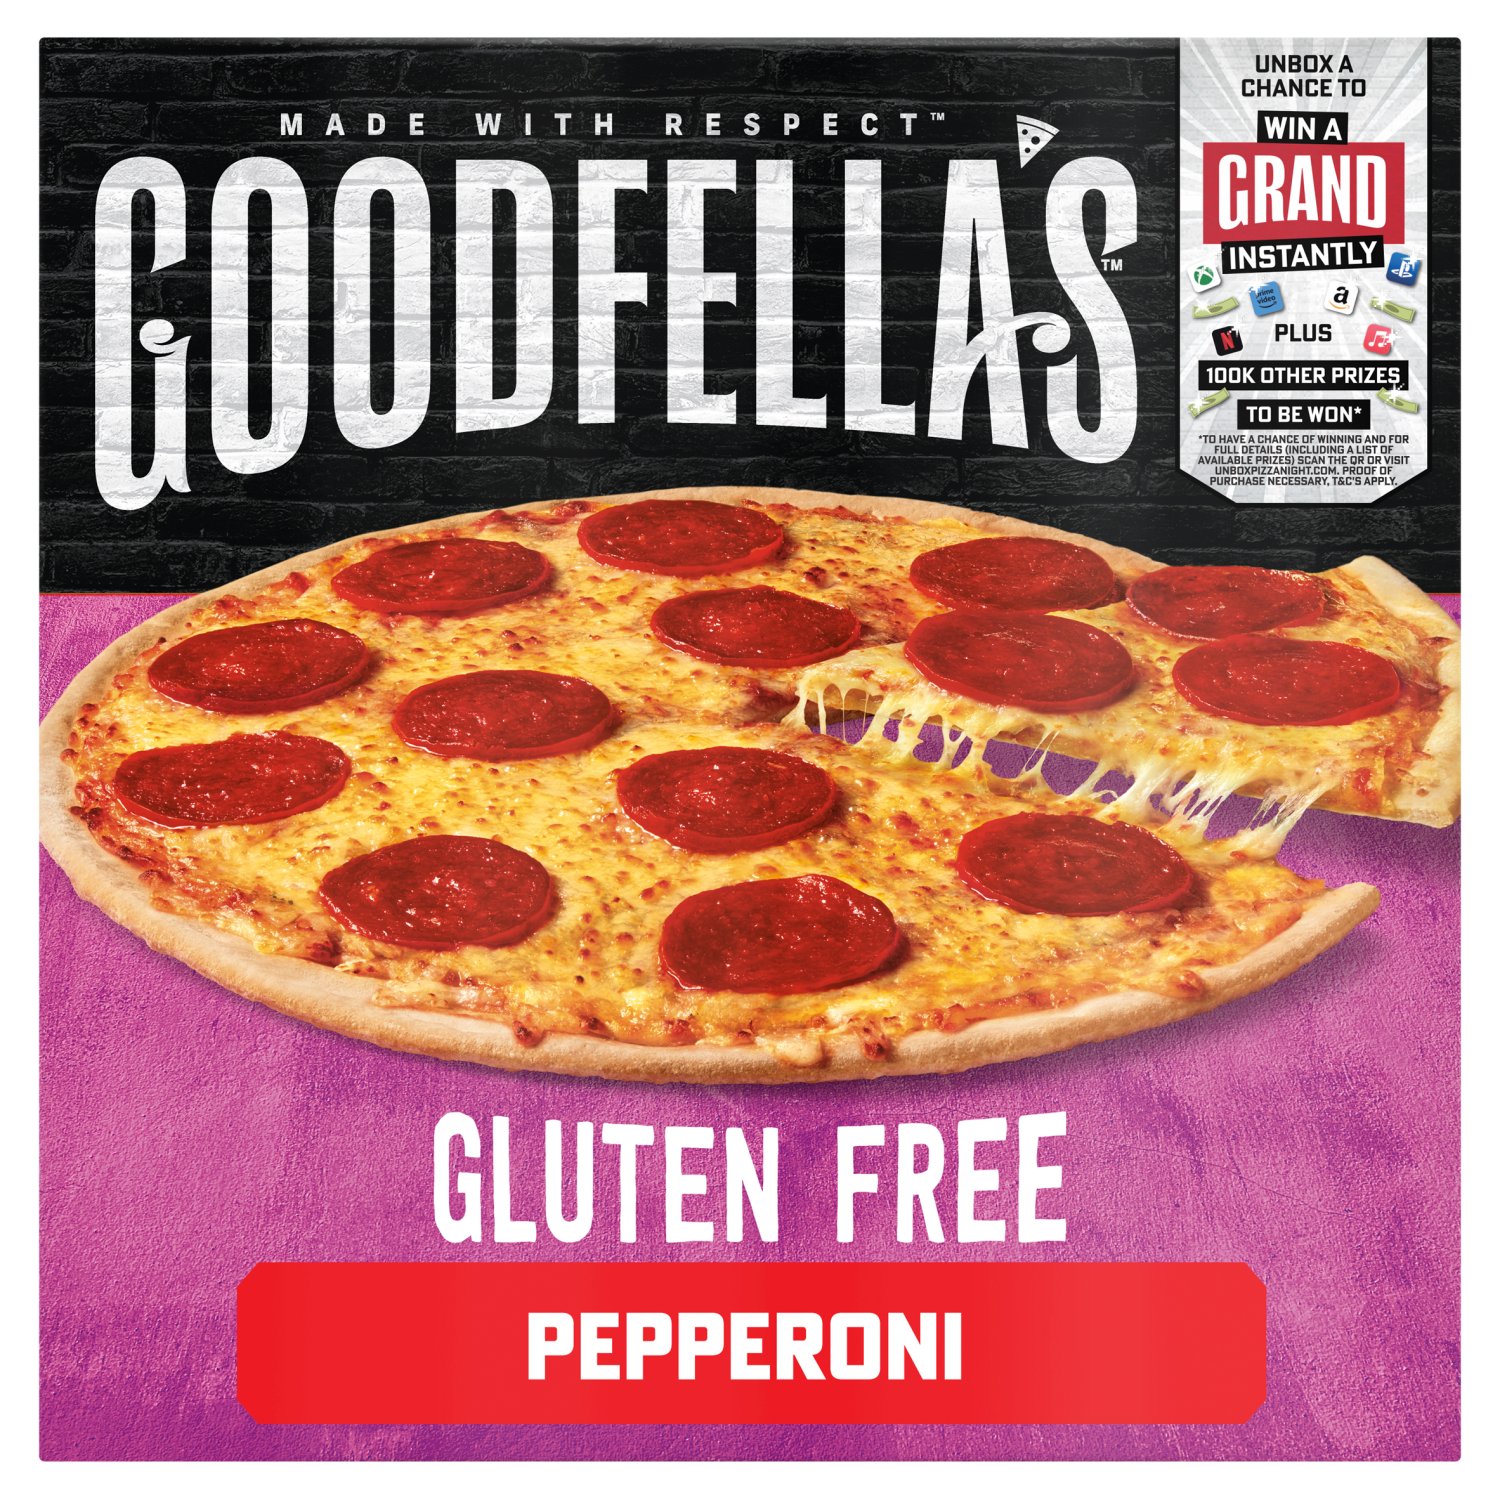 Goodfella's Gluten Free Pepperoni Pizza (317 g)